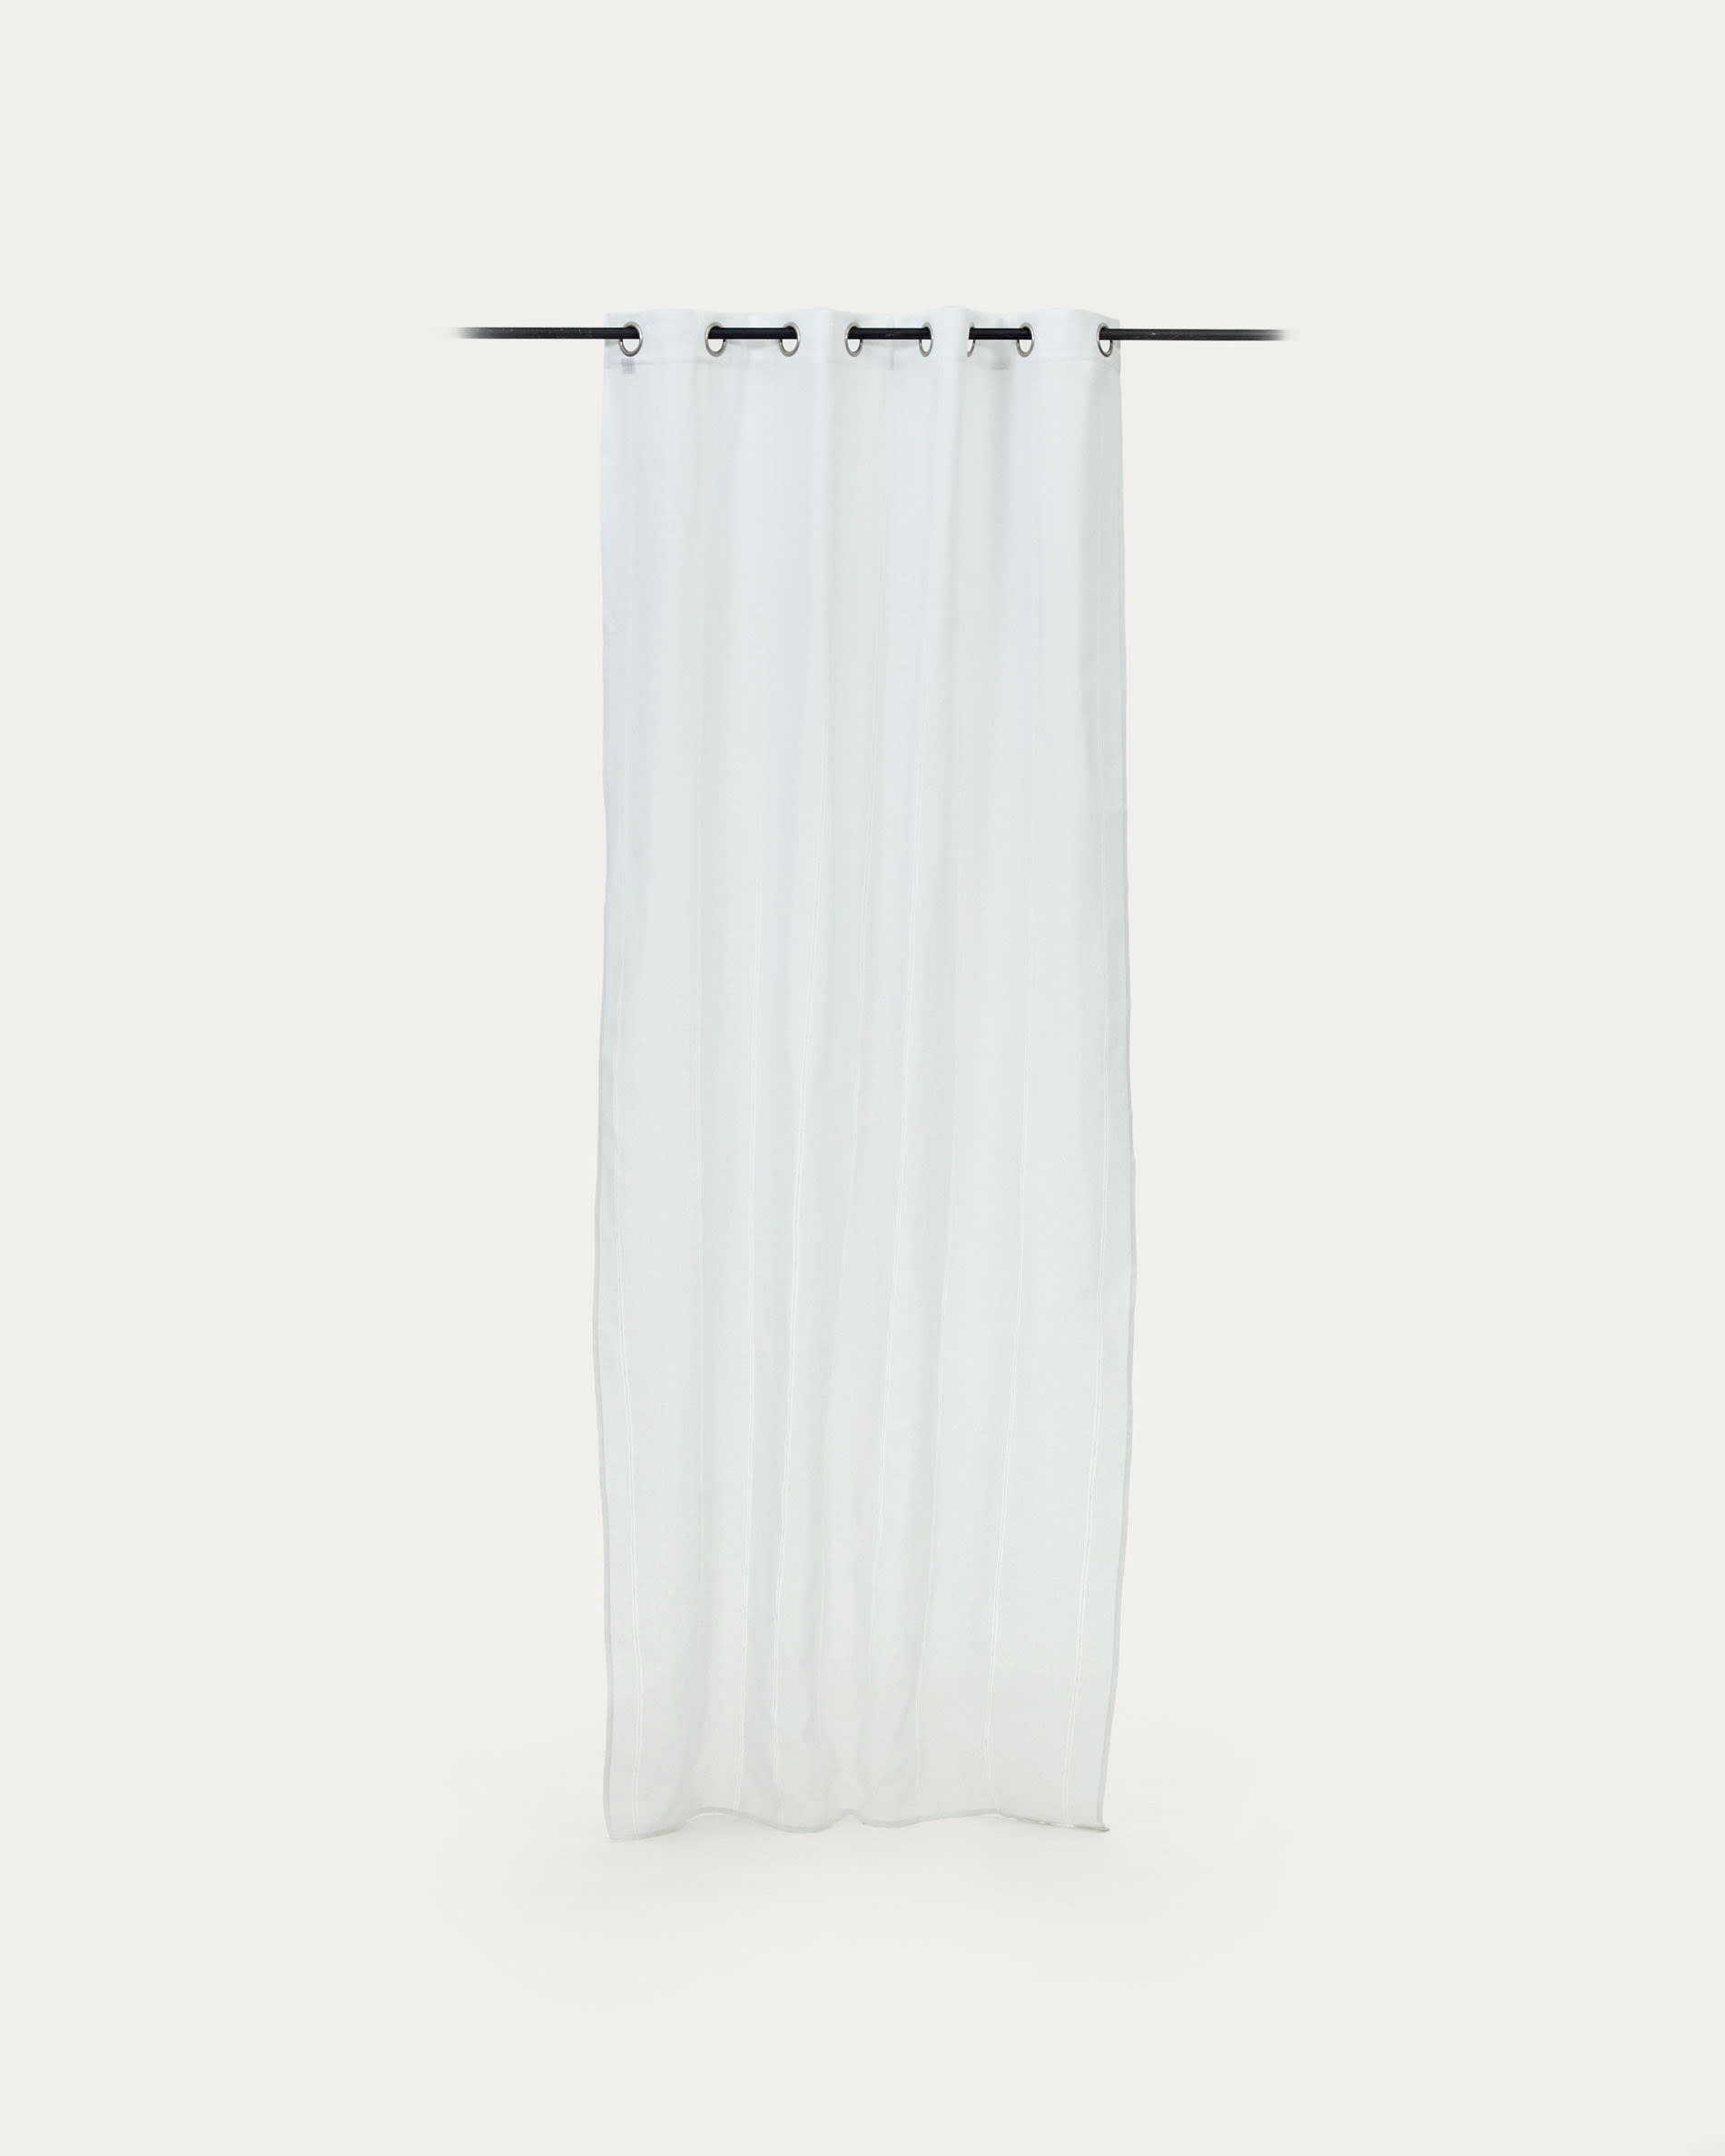 Tenda madrid leggera colore bianco, 140 x 260 cm